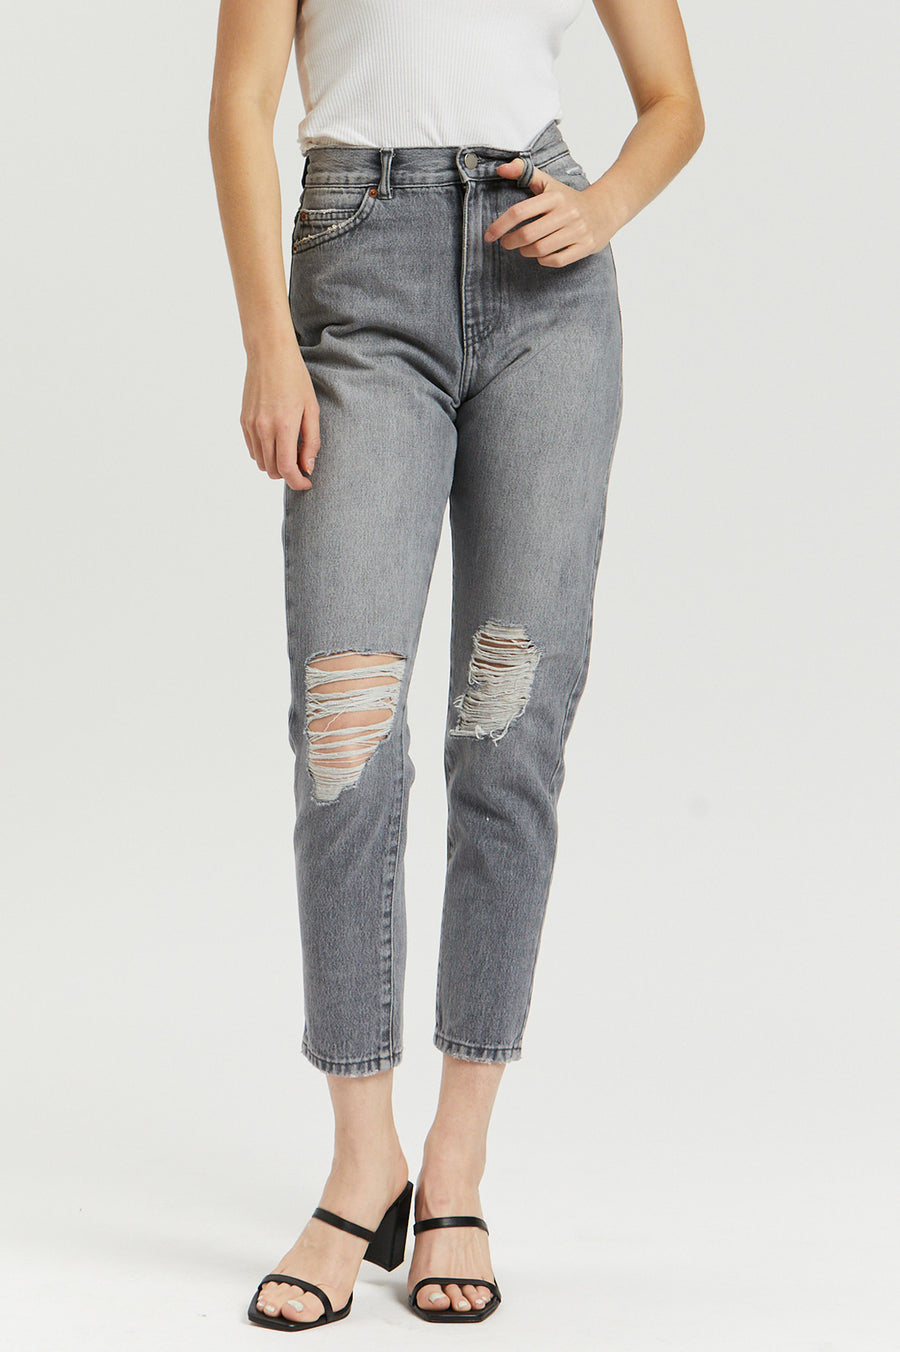 Nora Jeans - Washed Grey Rip - Dr Denim Jeans - Australia & NZ